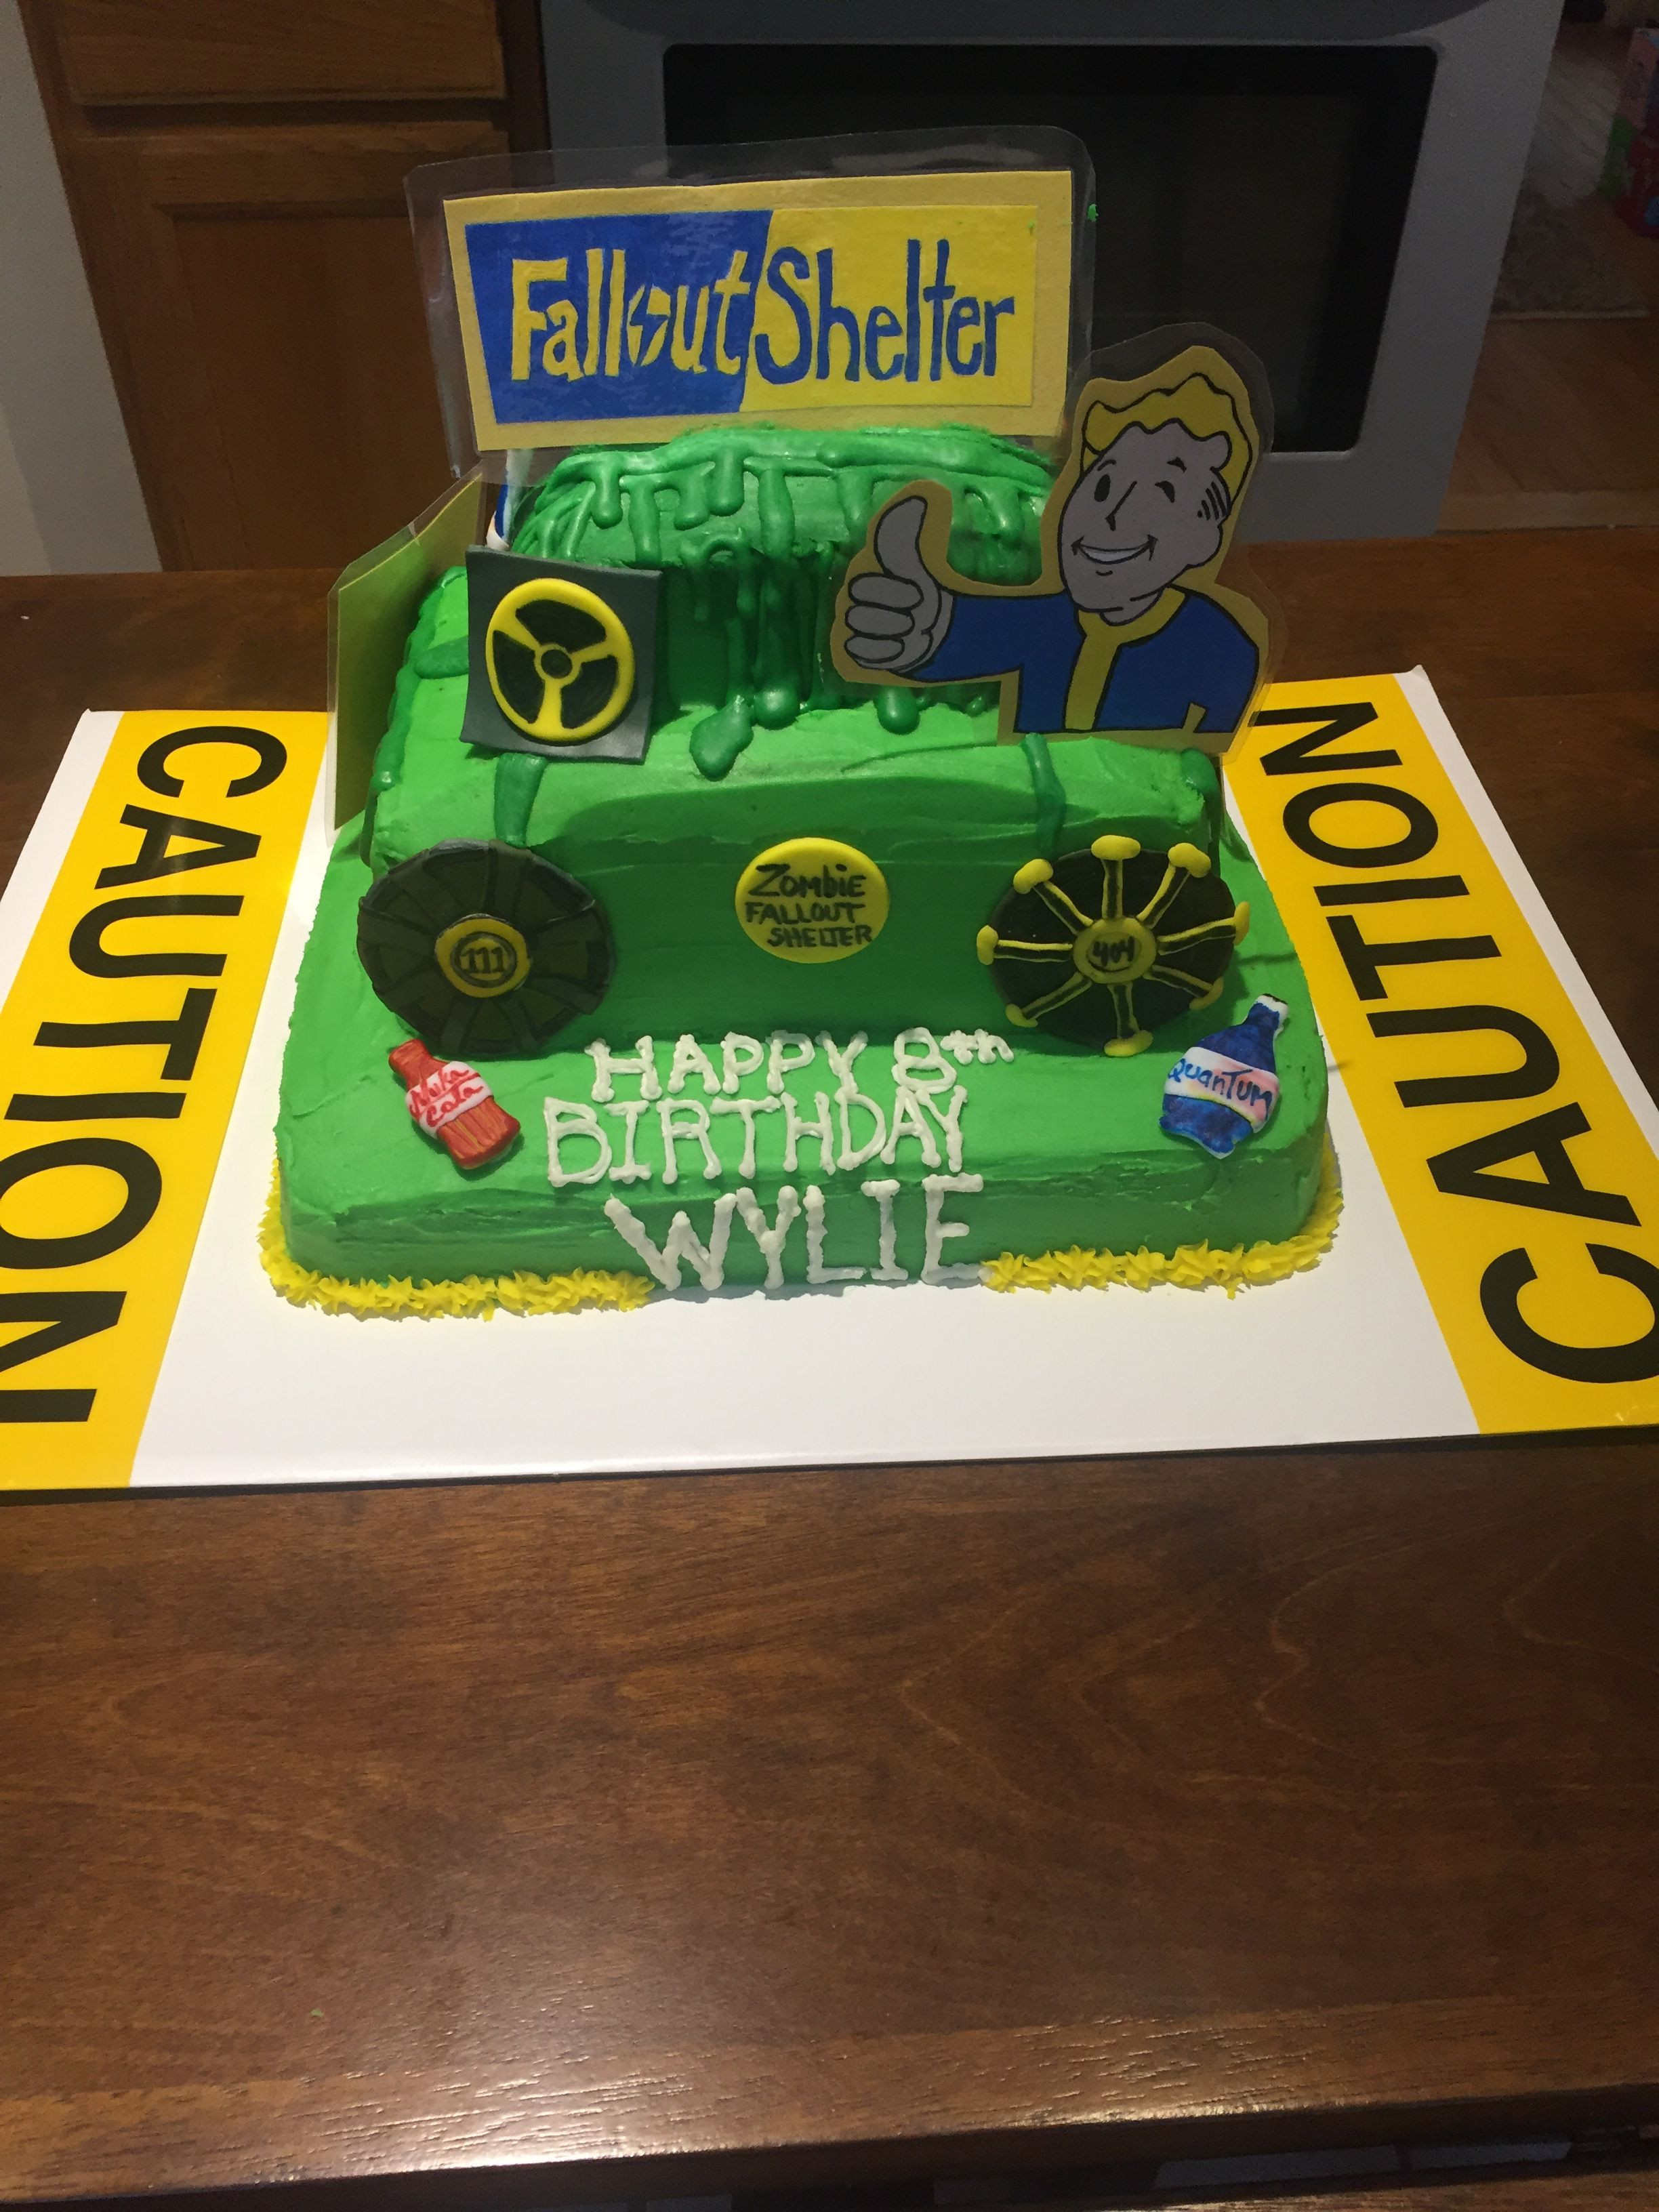 Fallout Birthday Cake
 Fallout Shelter Birthday cake